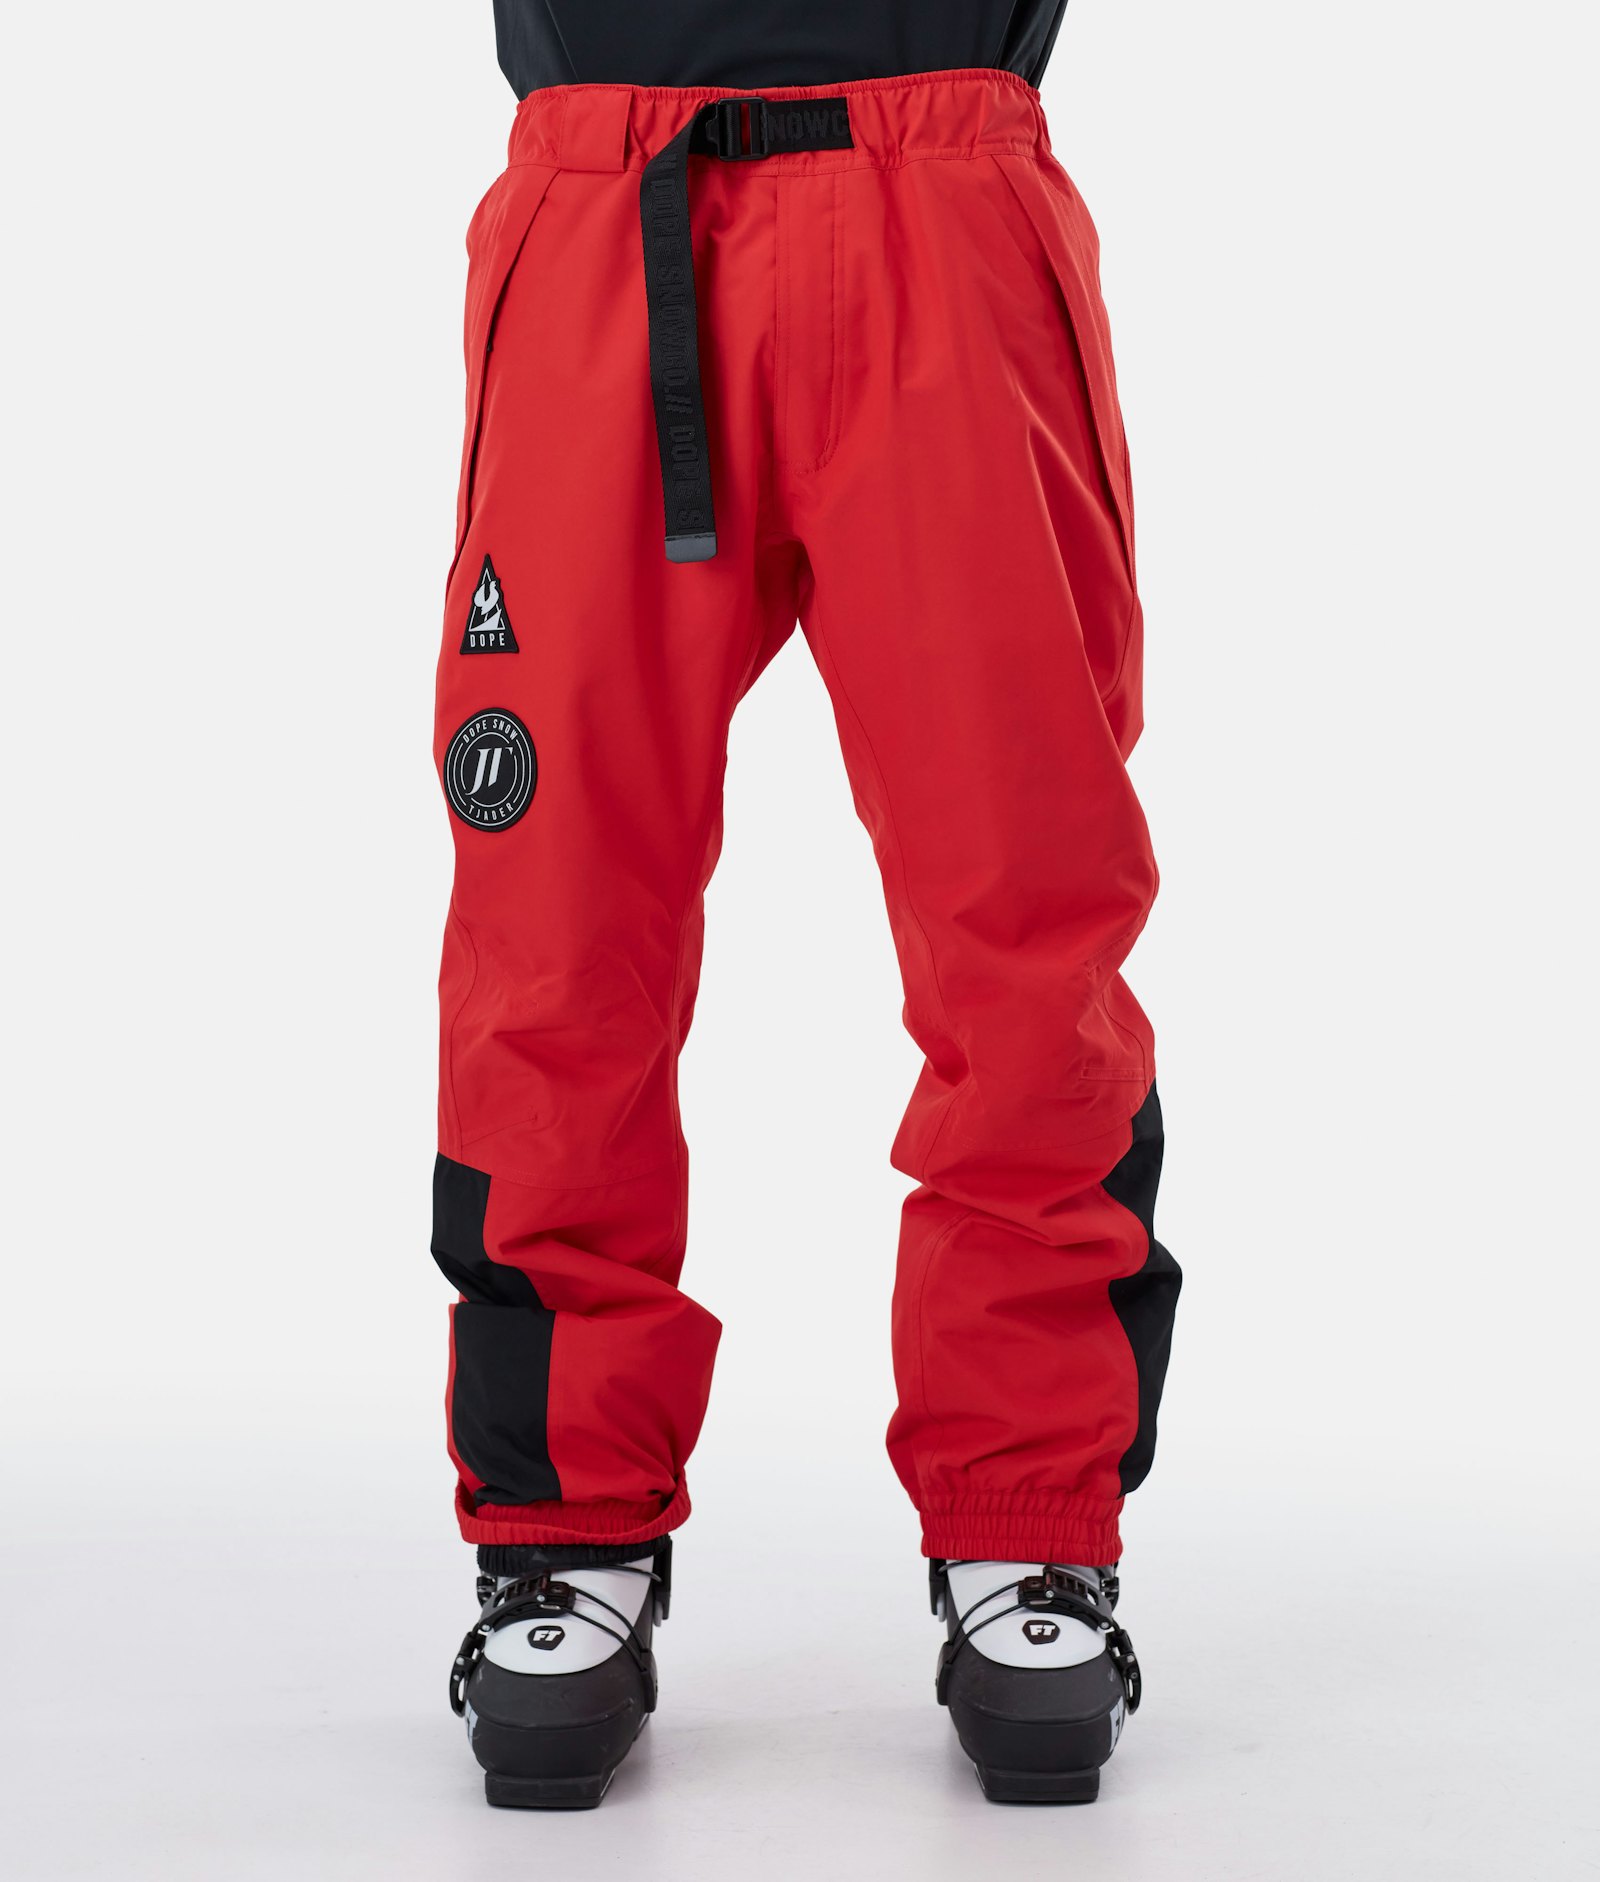 JT Blizzard 2020 Pantaloni Sci Uomo Red